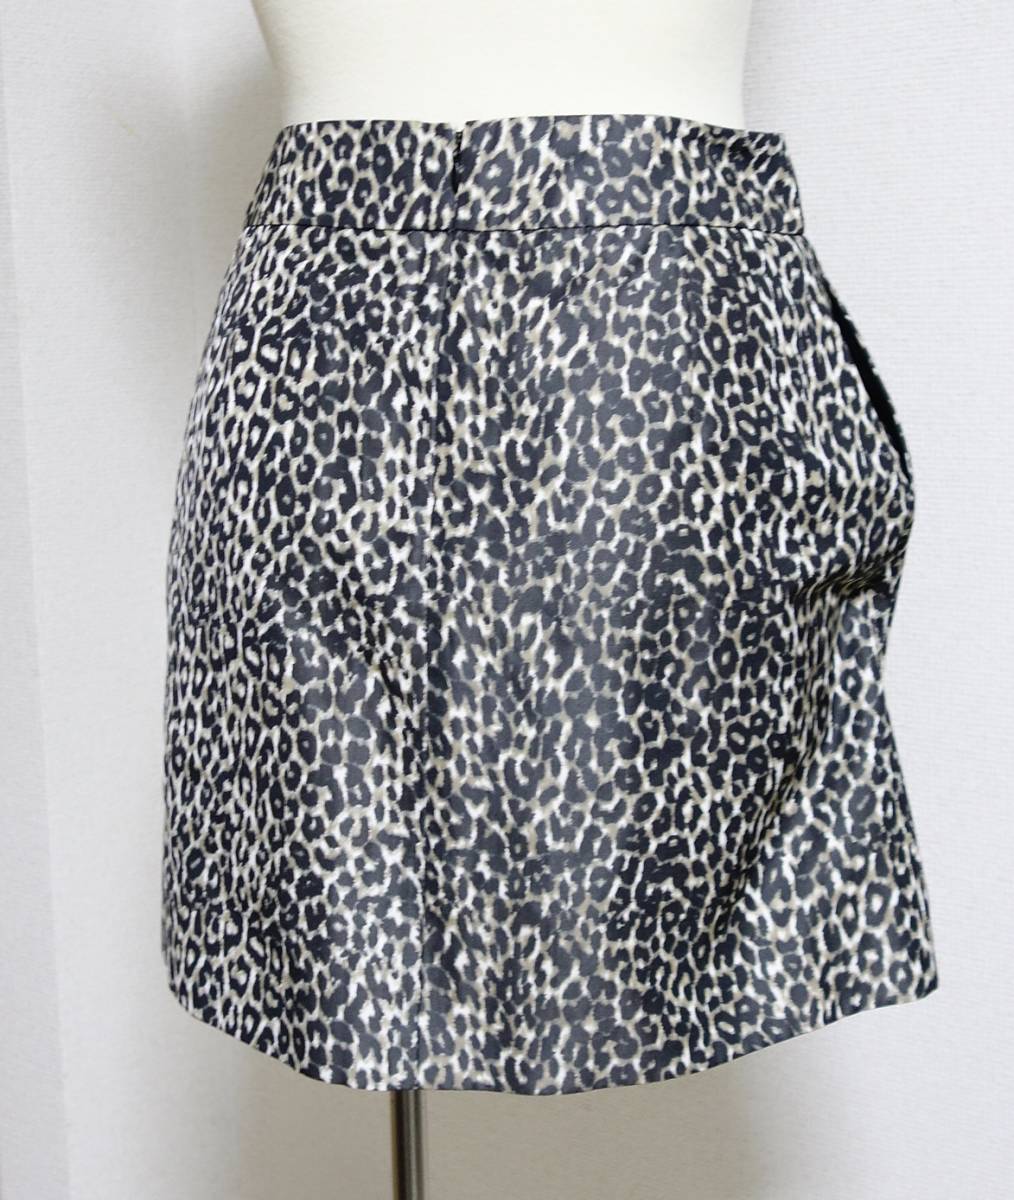  beautiful goods * PAULE KA paul (pole) ka beautiful Silhouette skirt 38 leopard print Leopard pattern Hungary made 